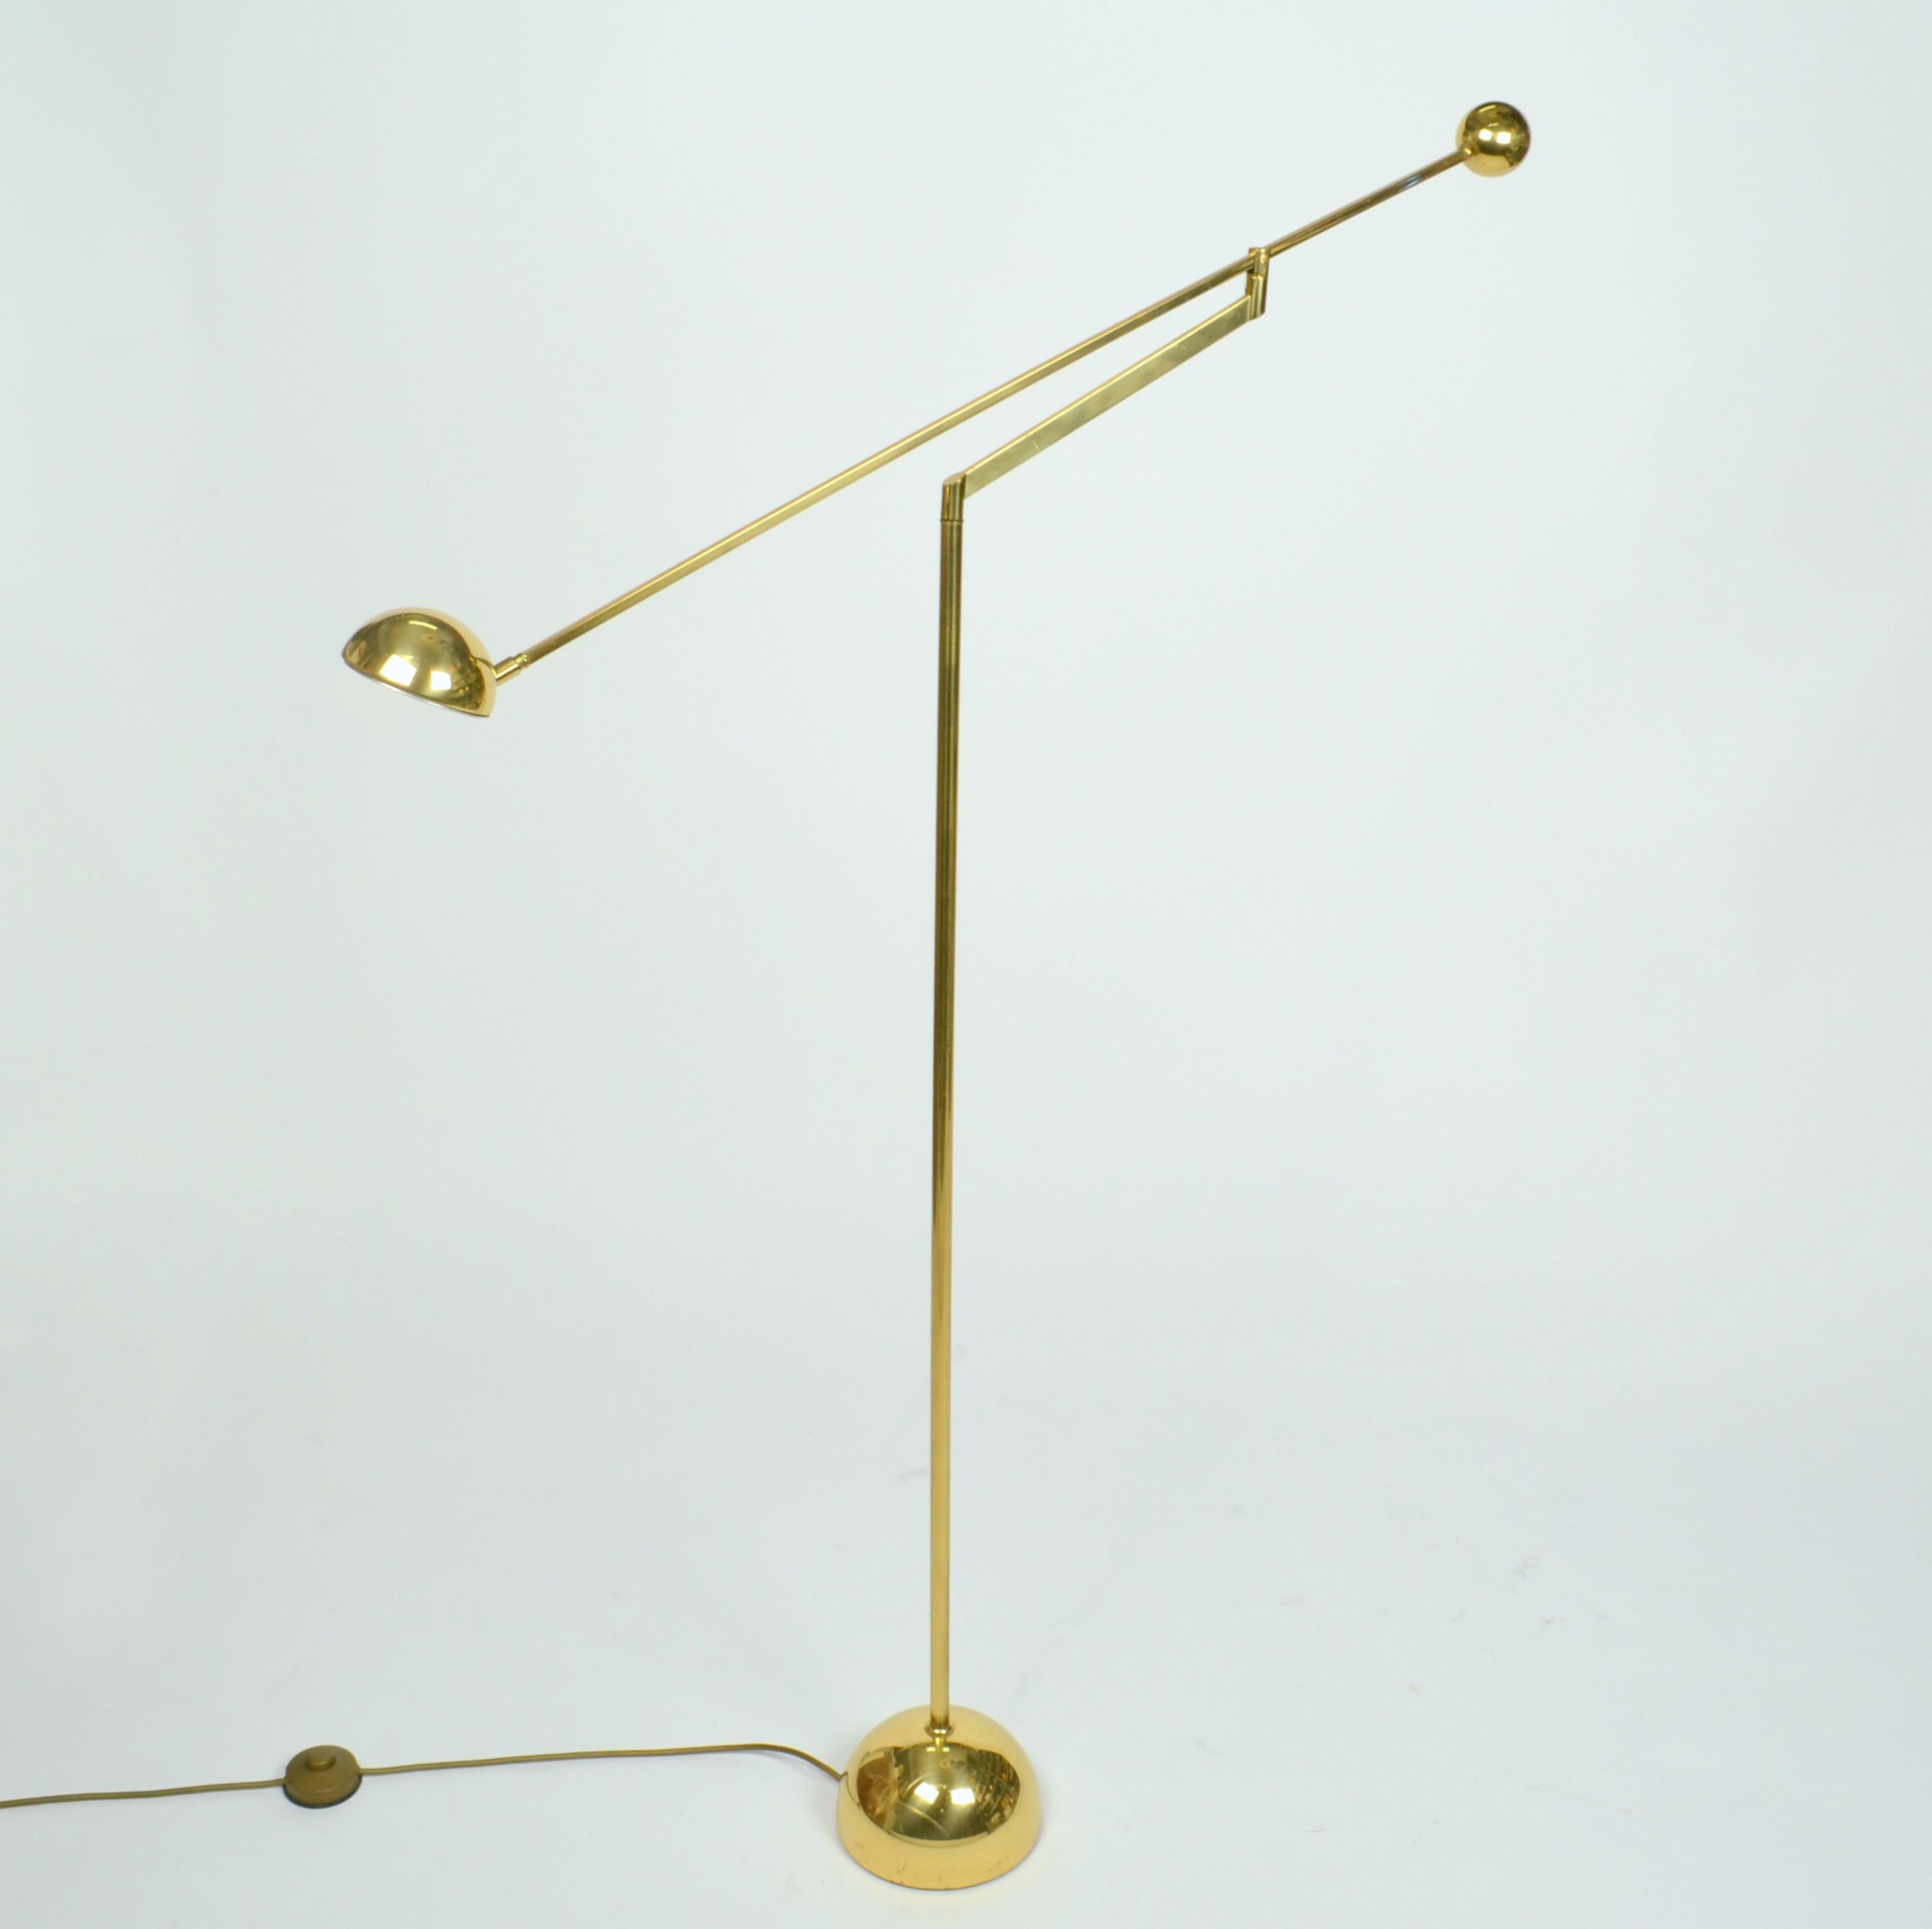 German Minimal Brass Counter Balance 1970sFloor Lamp For Sale